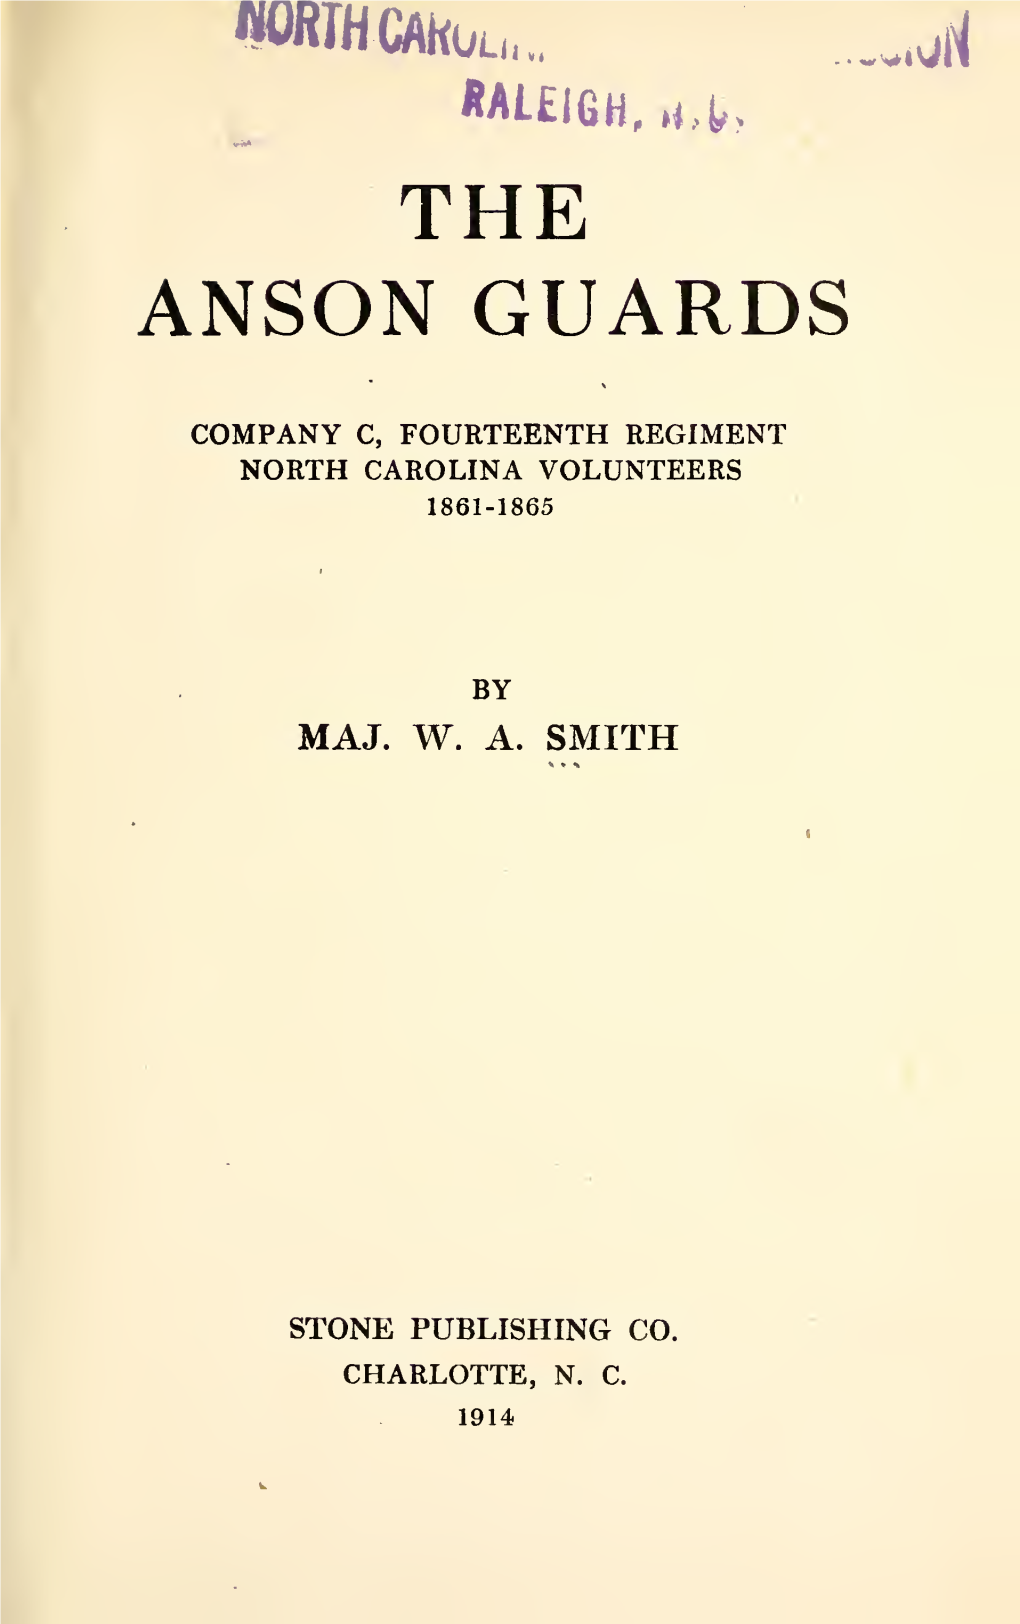 The Anson Guards, Company C, Fourteenth Regiment, North Carolina